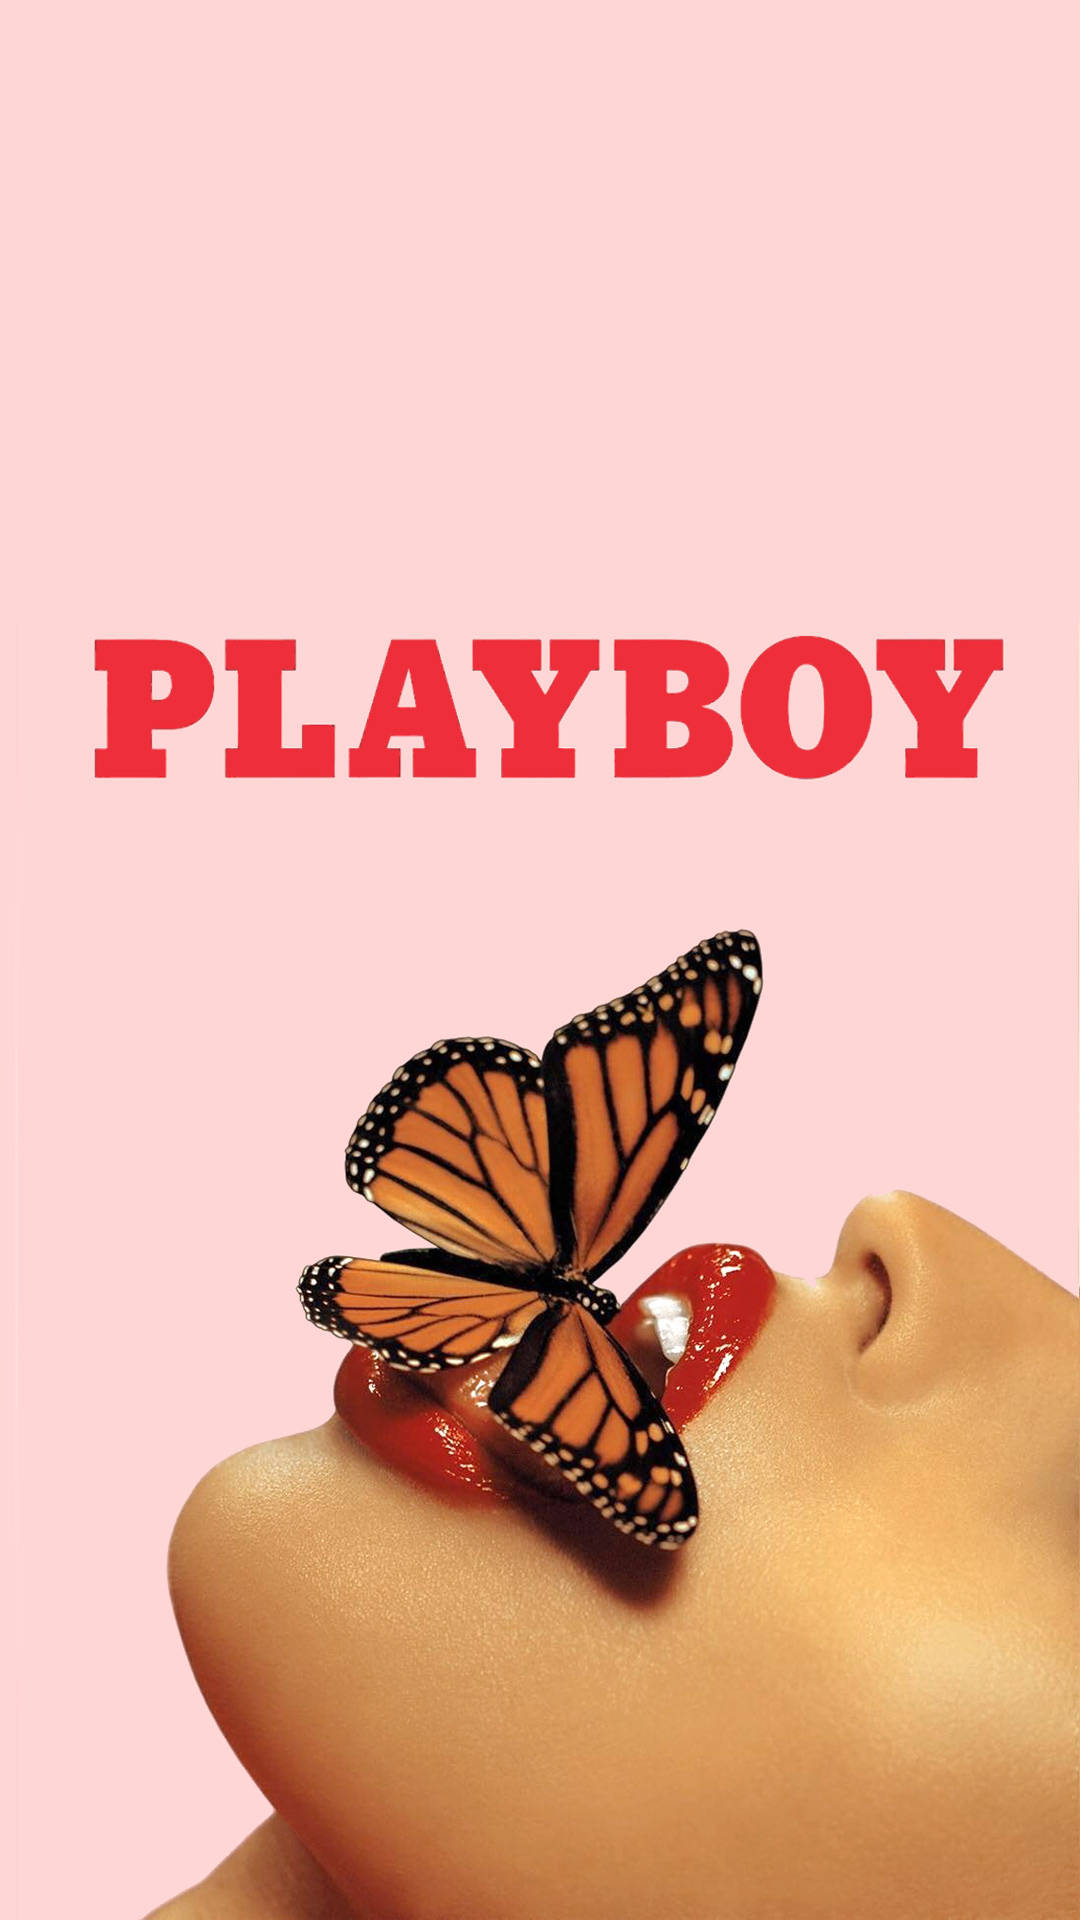 Playboy Butterfly Wallpaper